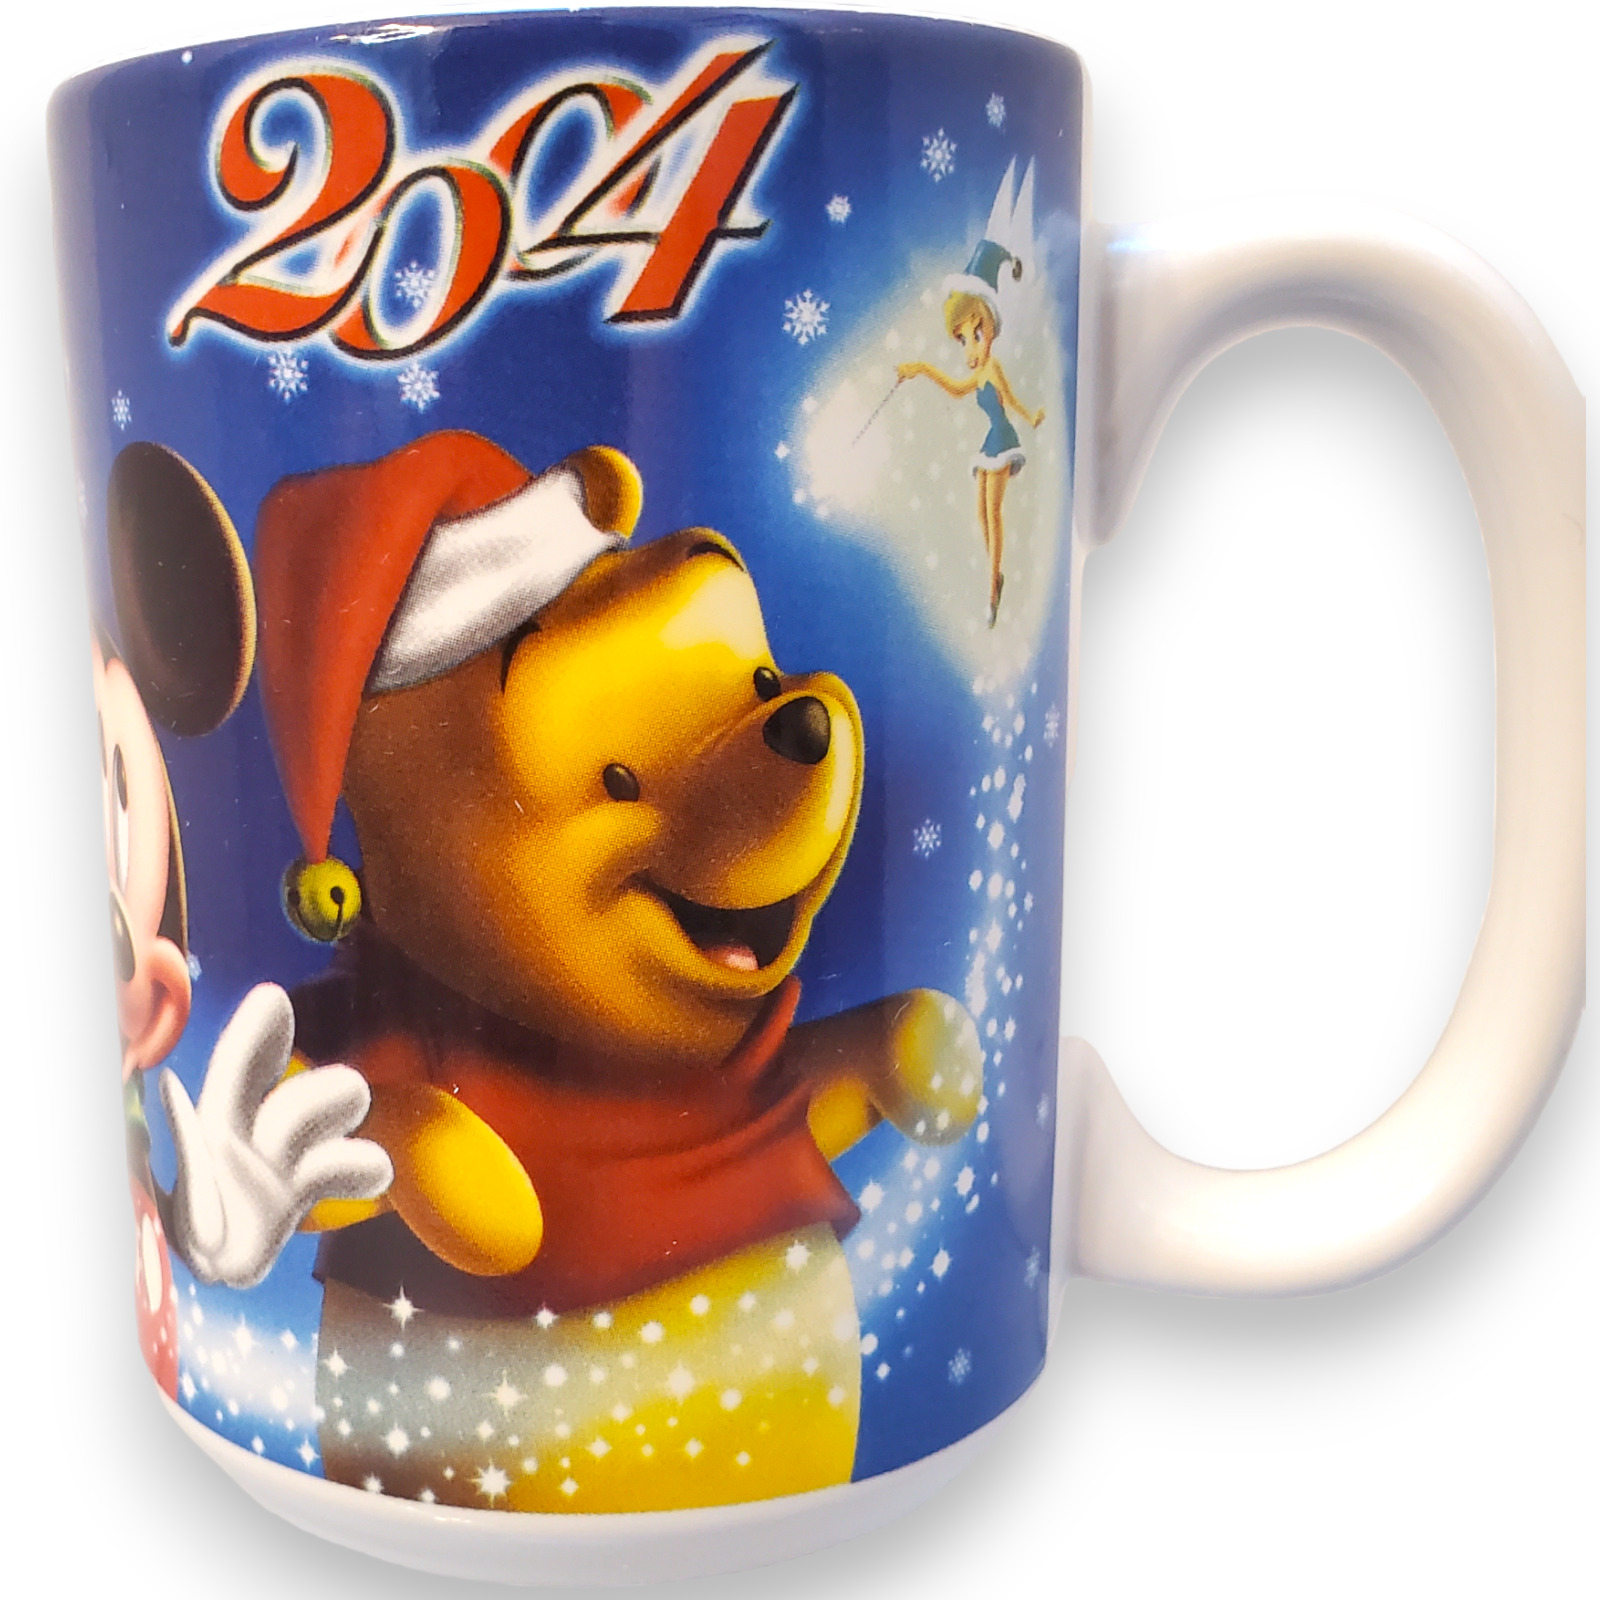 VTG 2004 Holiday Mug Disney Store Coffee Cup Snow White Dopey Mickey Pinocchio